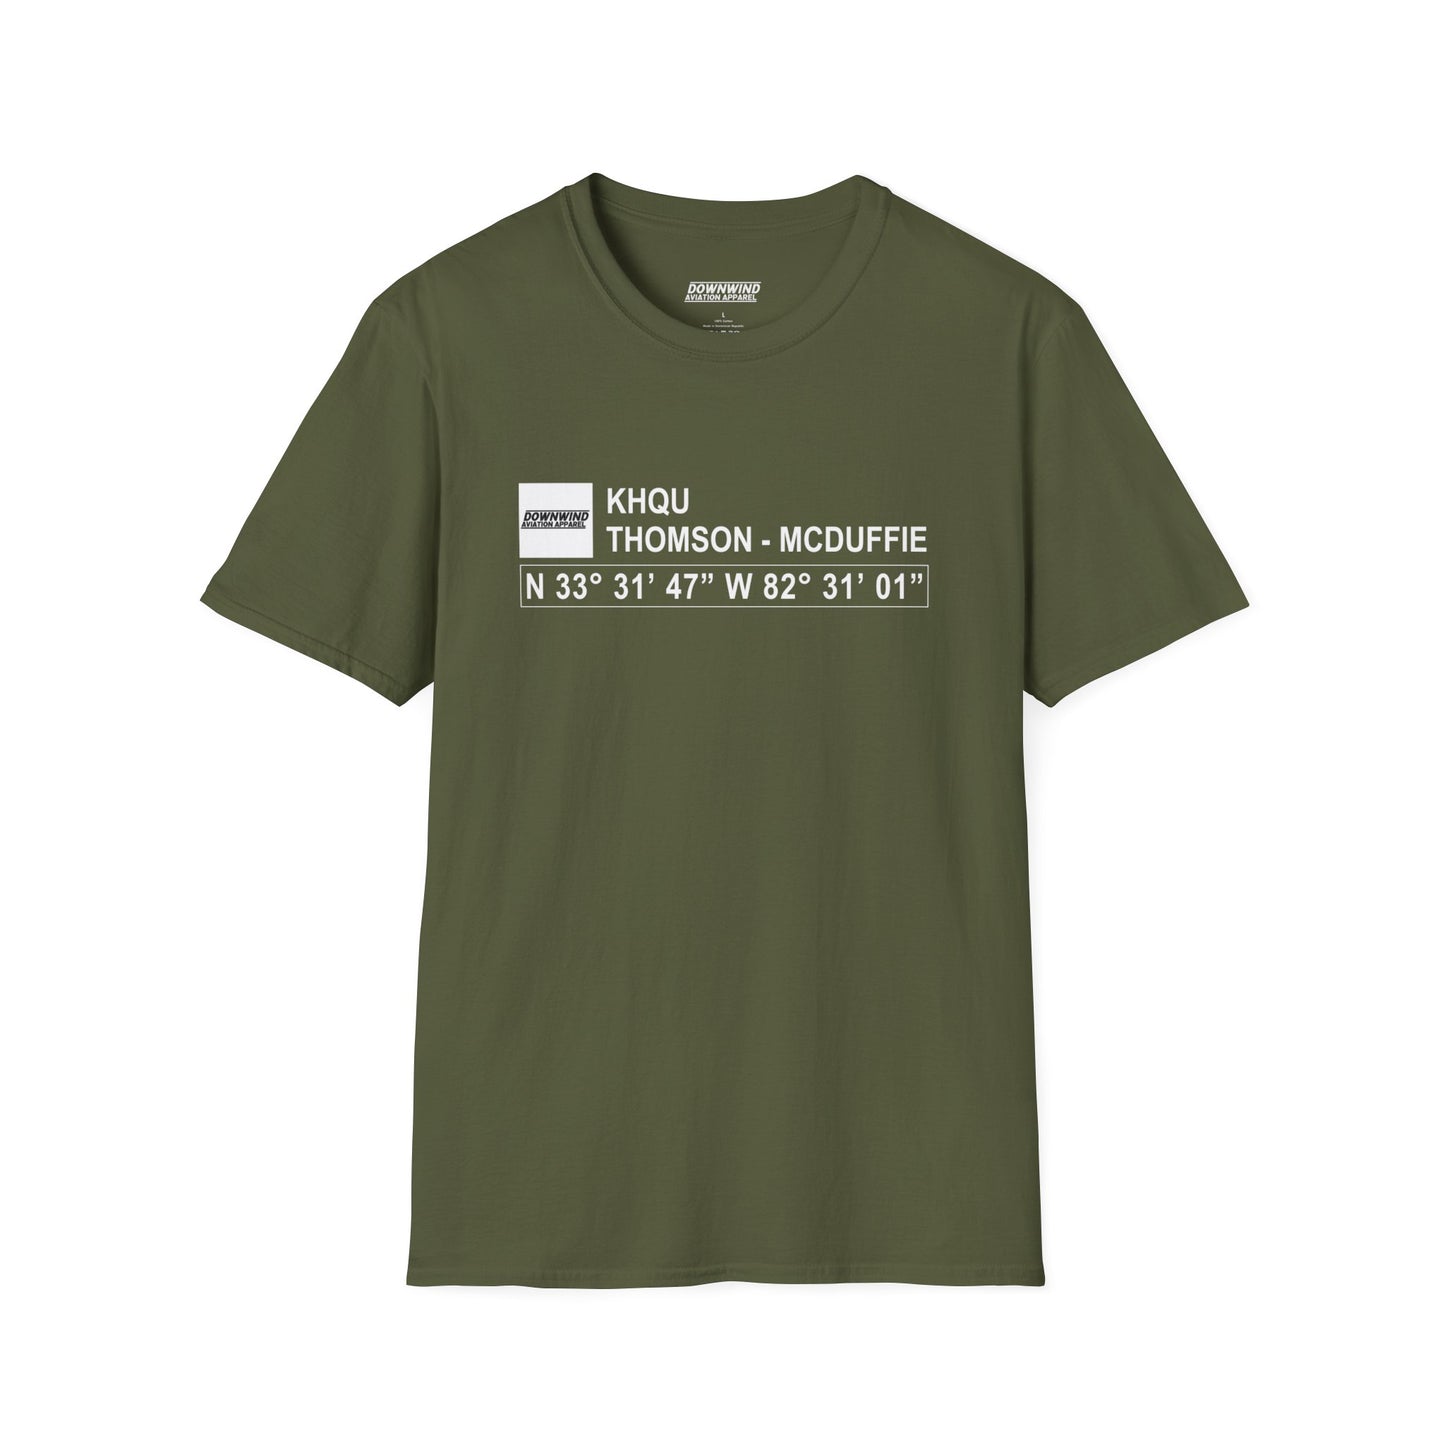 KHQU / Thomson - McDuffie T-Shirt